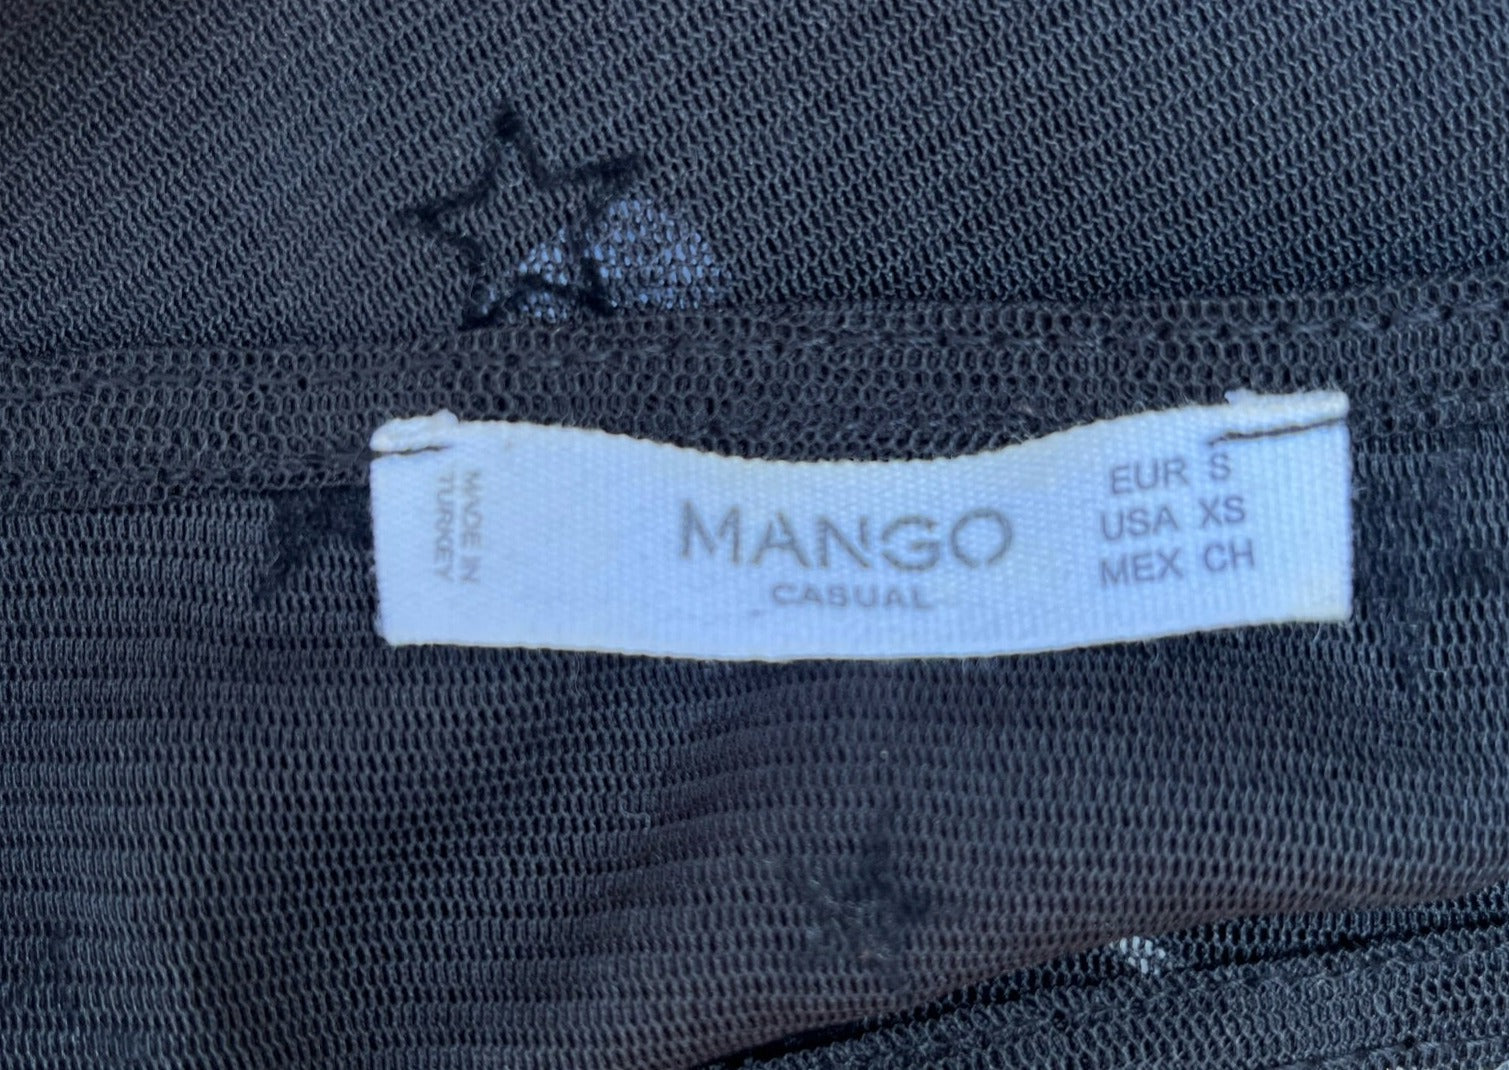 Mango star top label